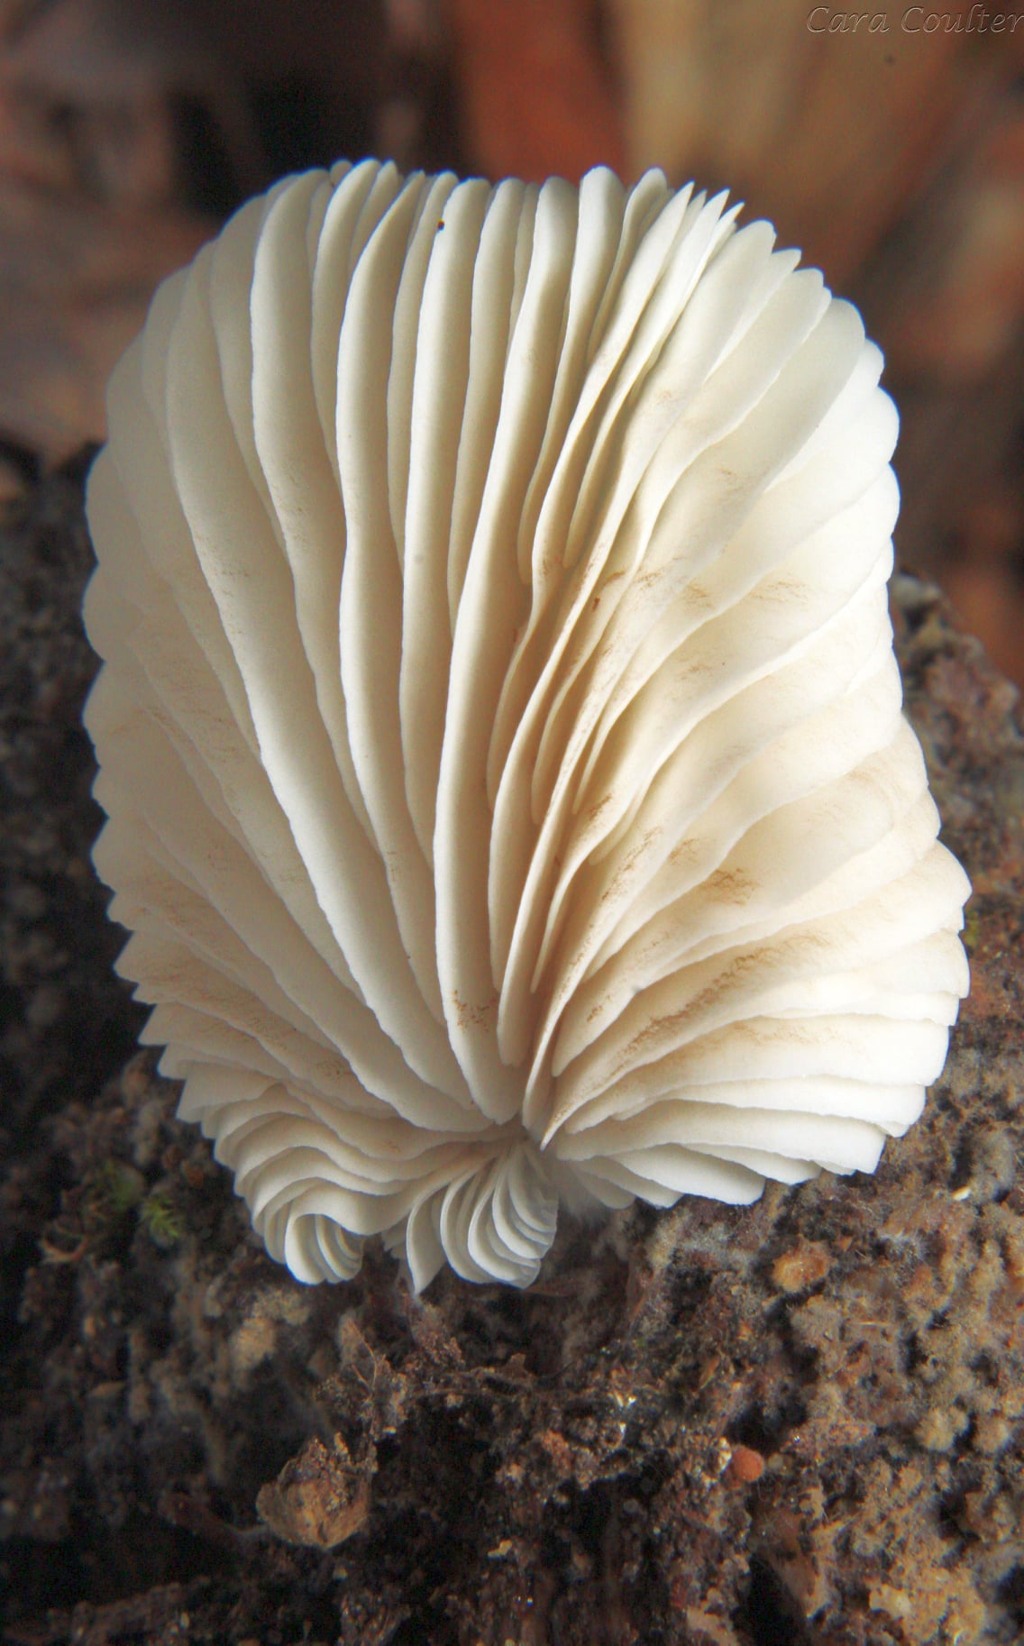 Phenomenal Fungi at Powdermill Nature Reserve